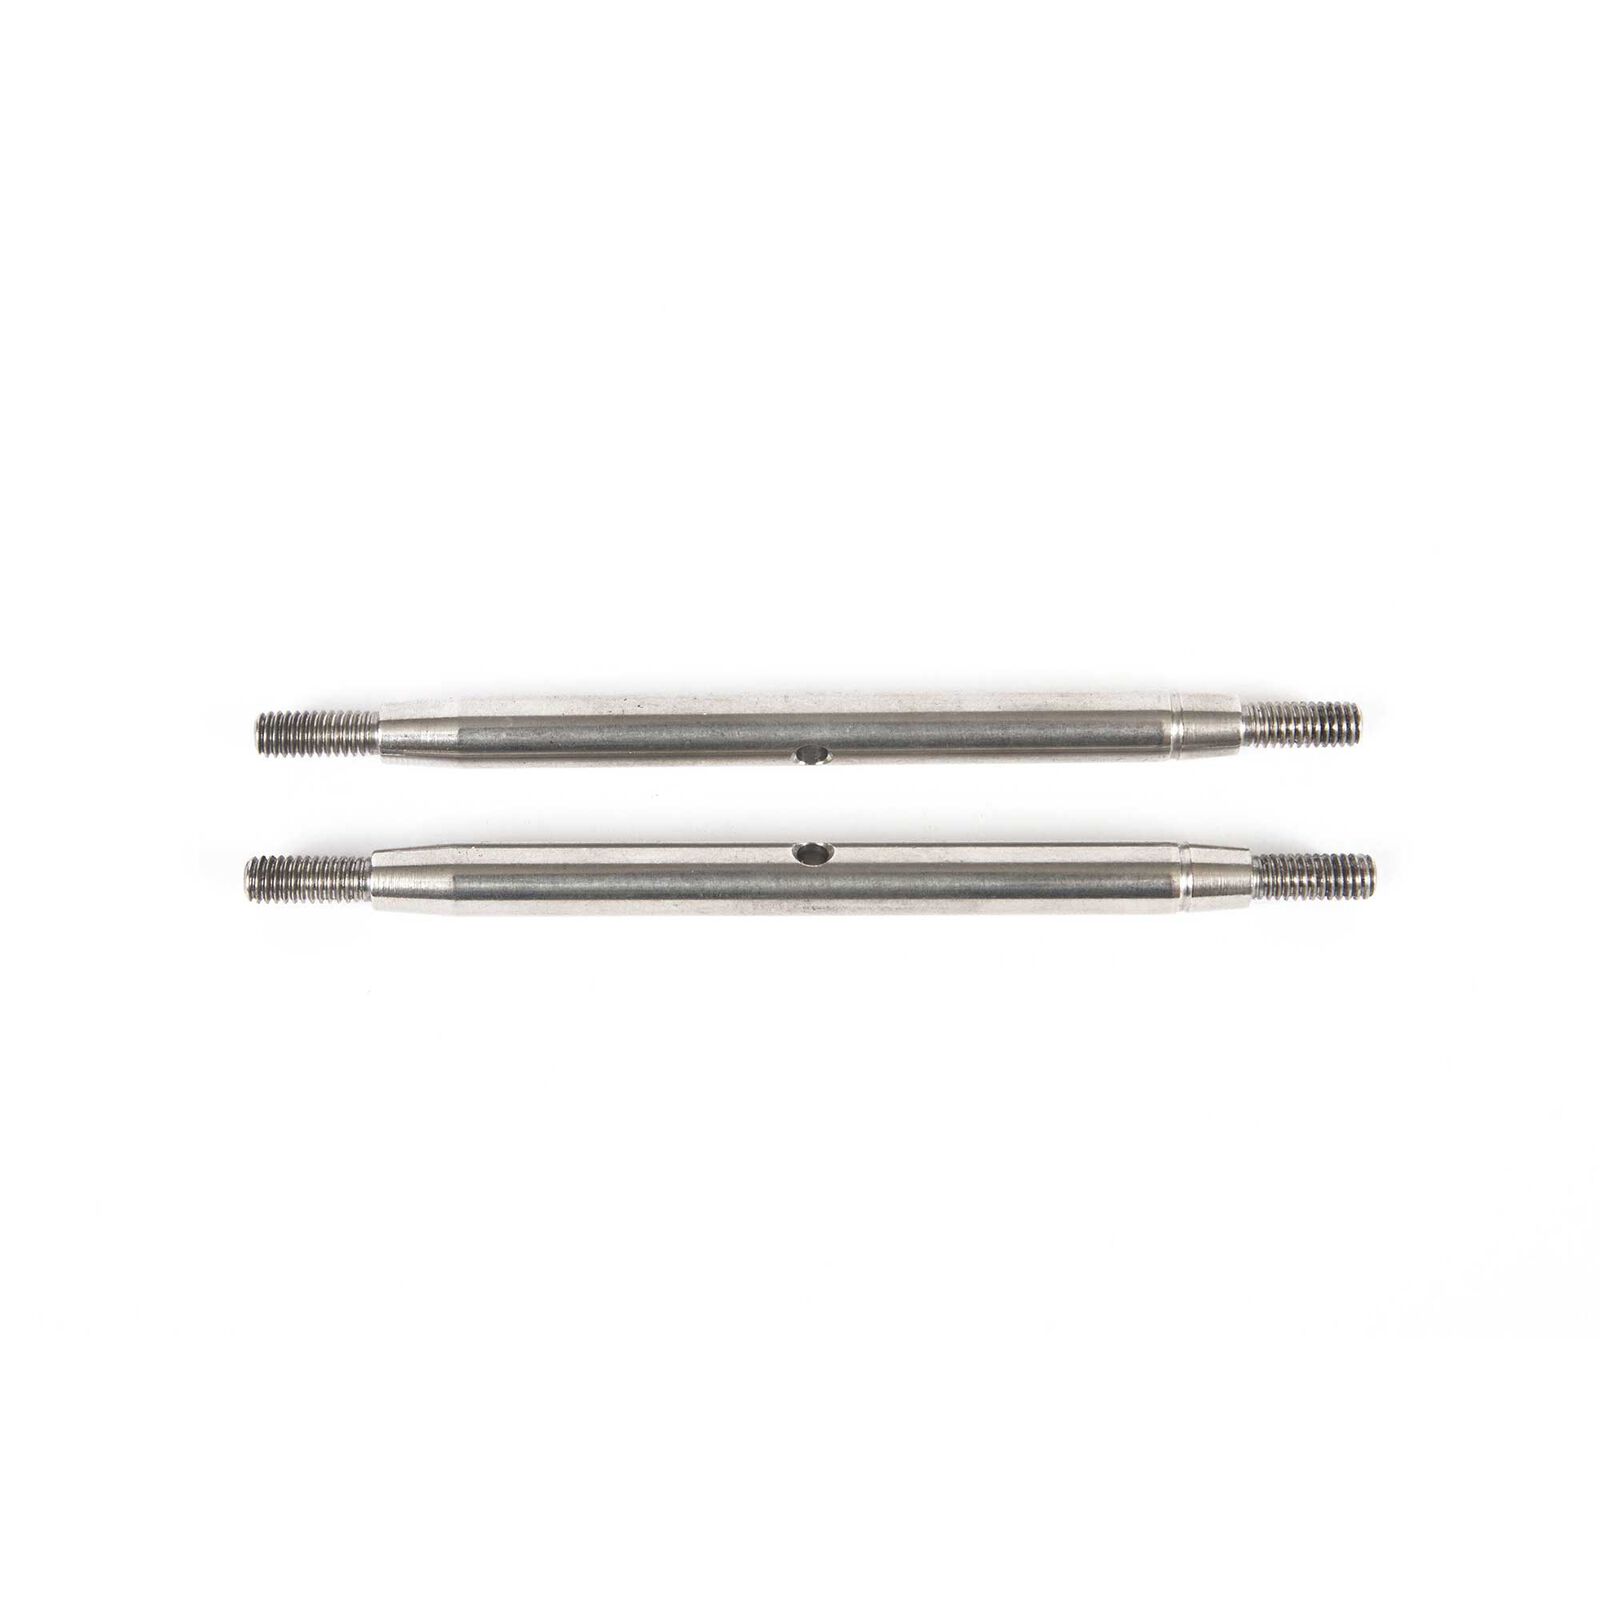 AXIAL Stainless Steel Link, M6 x 89mm (2): Capra 1.9 UTB